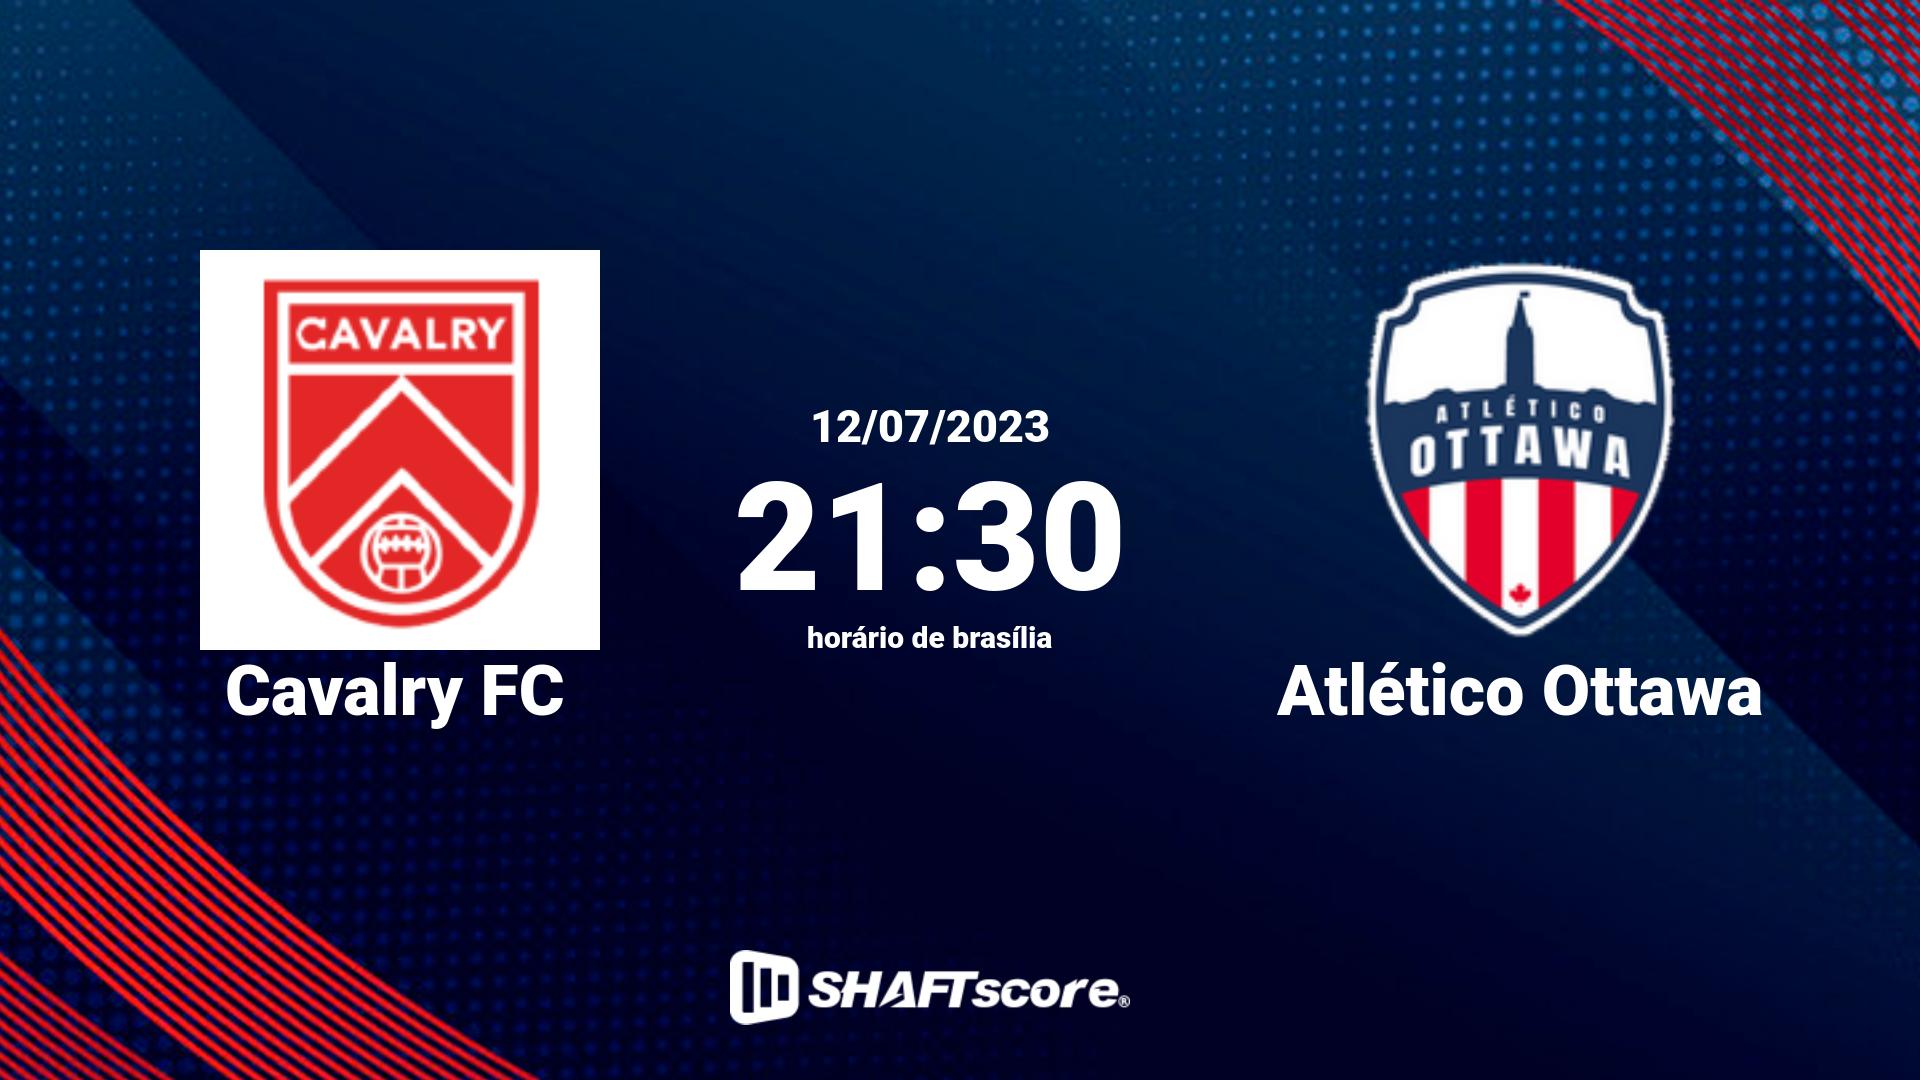 Estatísticas do jogo Cavalry FC vs Atlético Ottawa 12.07 21:30